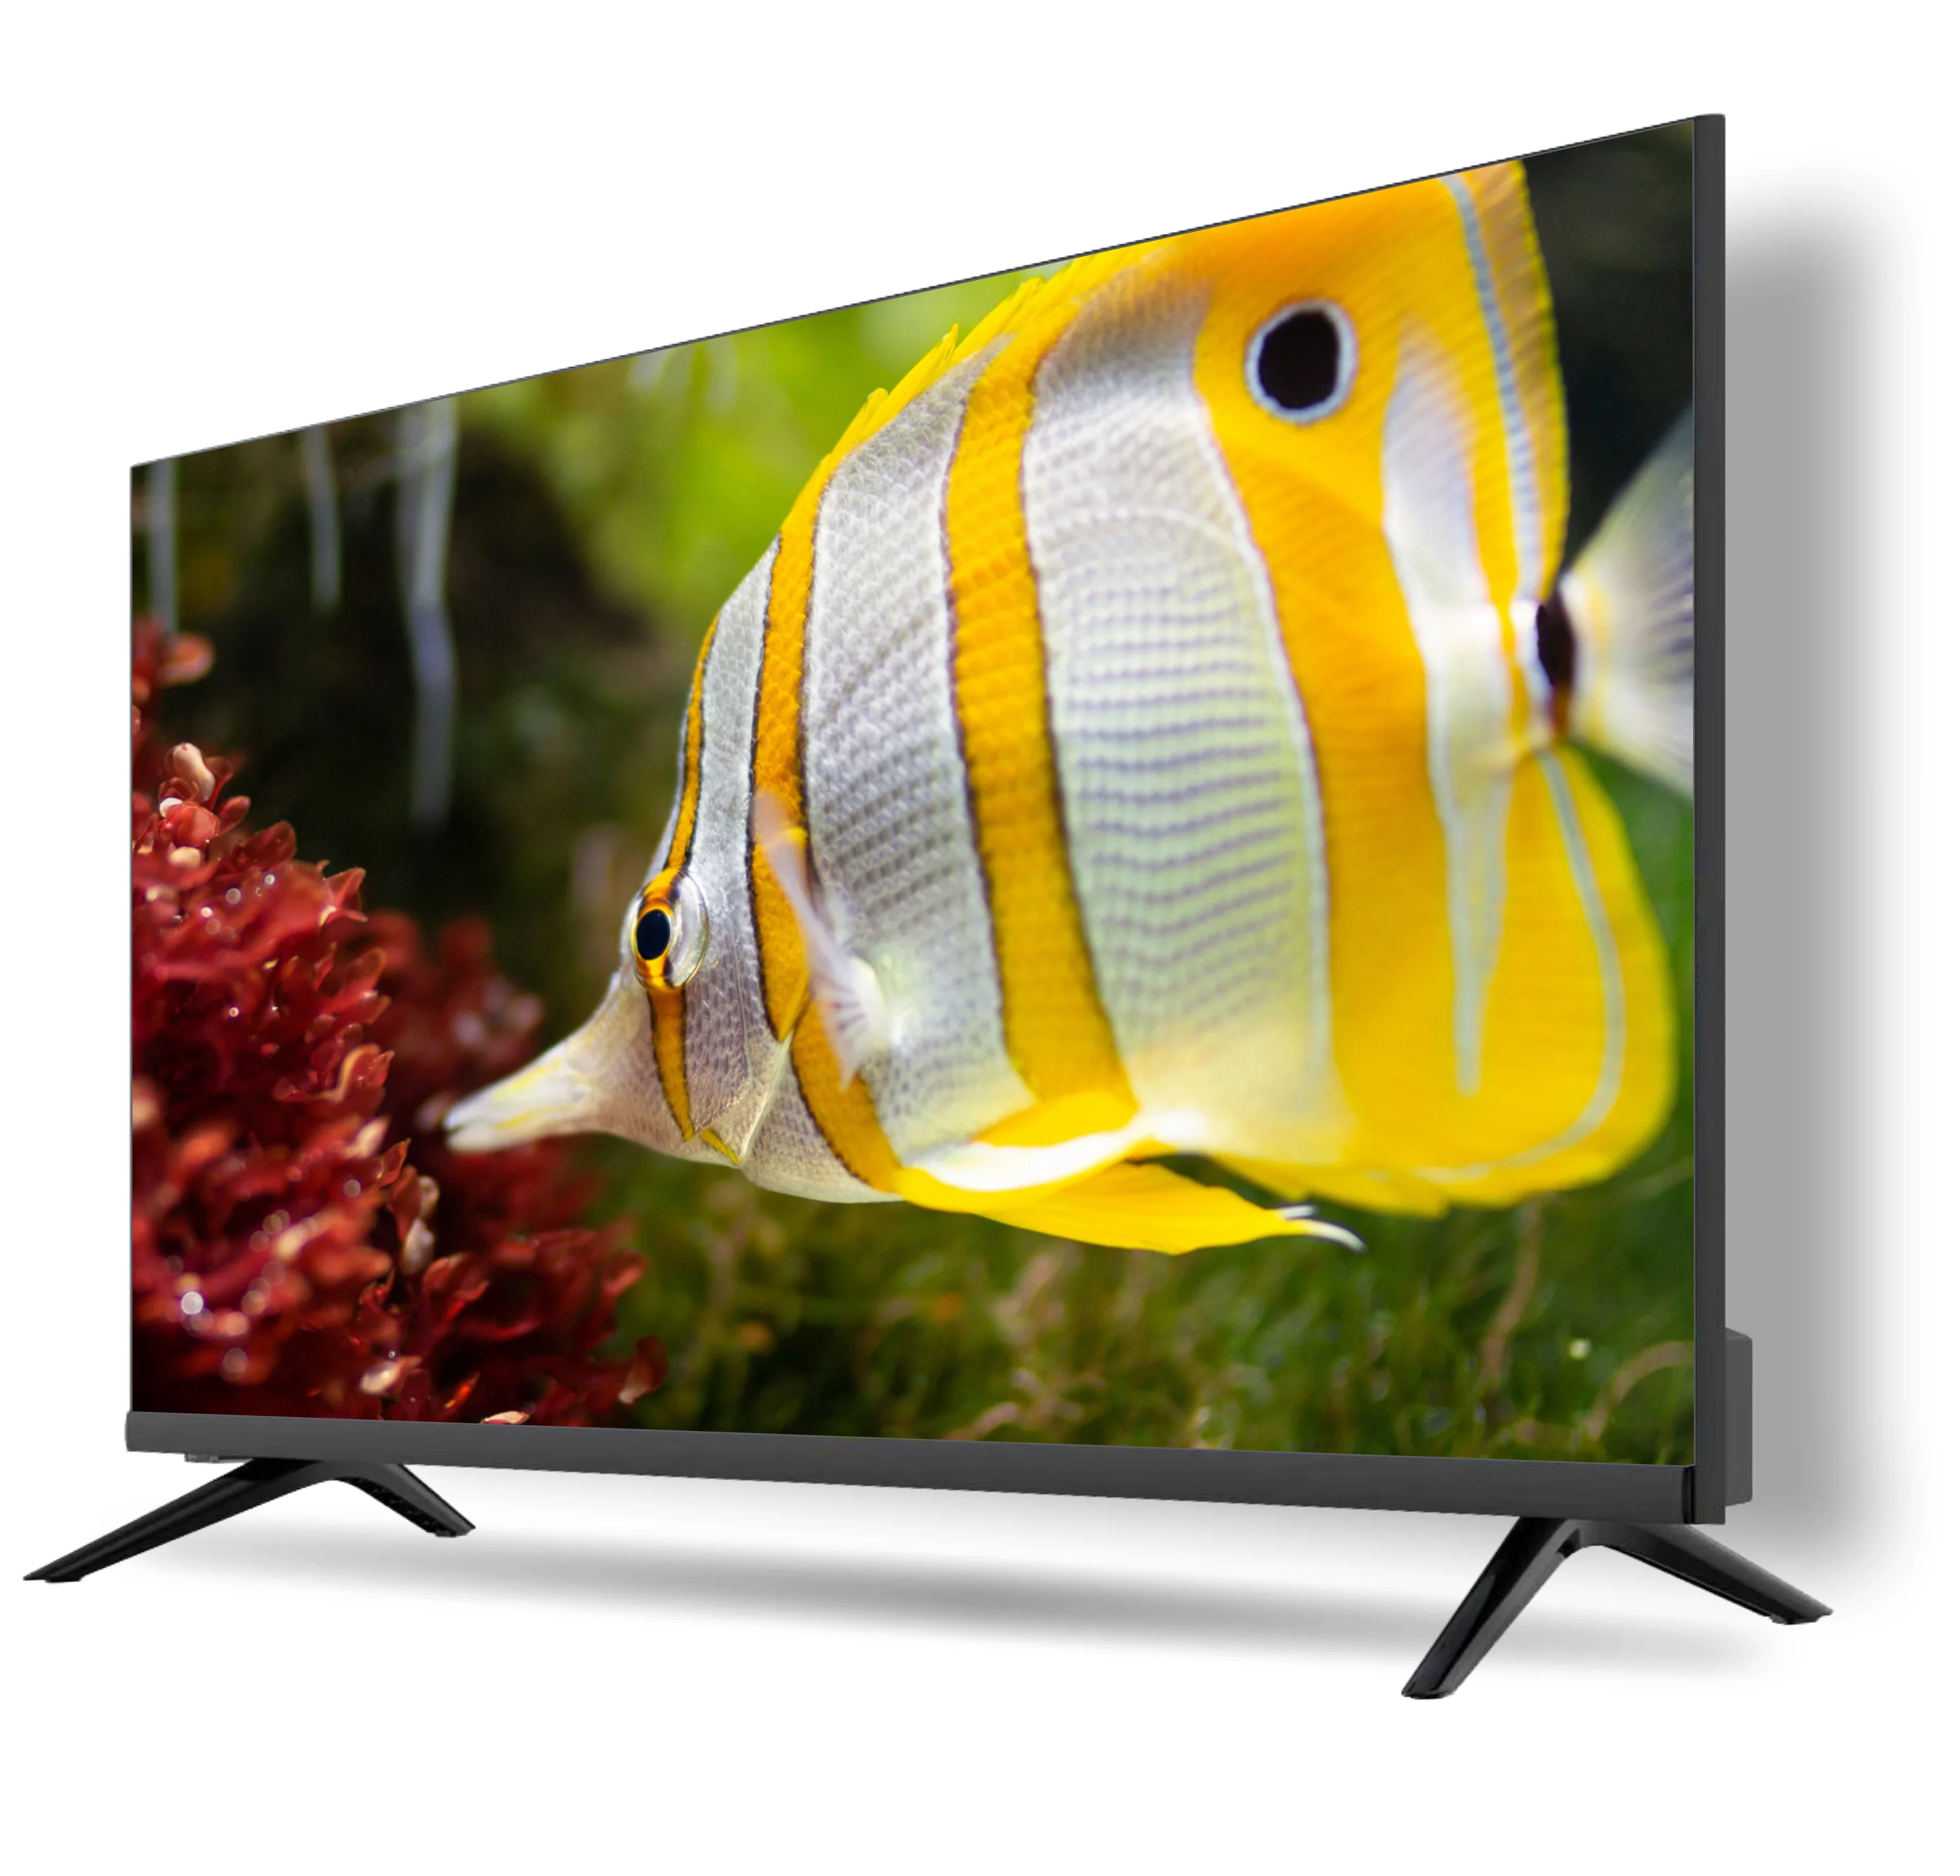 Haina frameless super slim smart tv 32 inch with WIFI (62231486932)